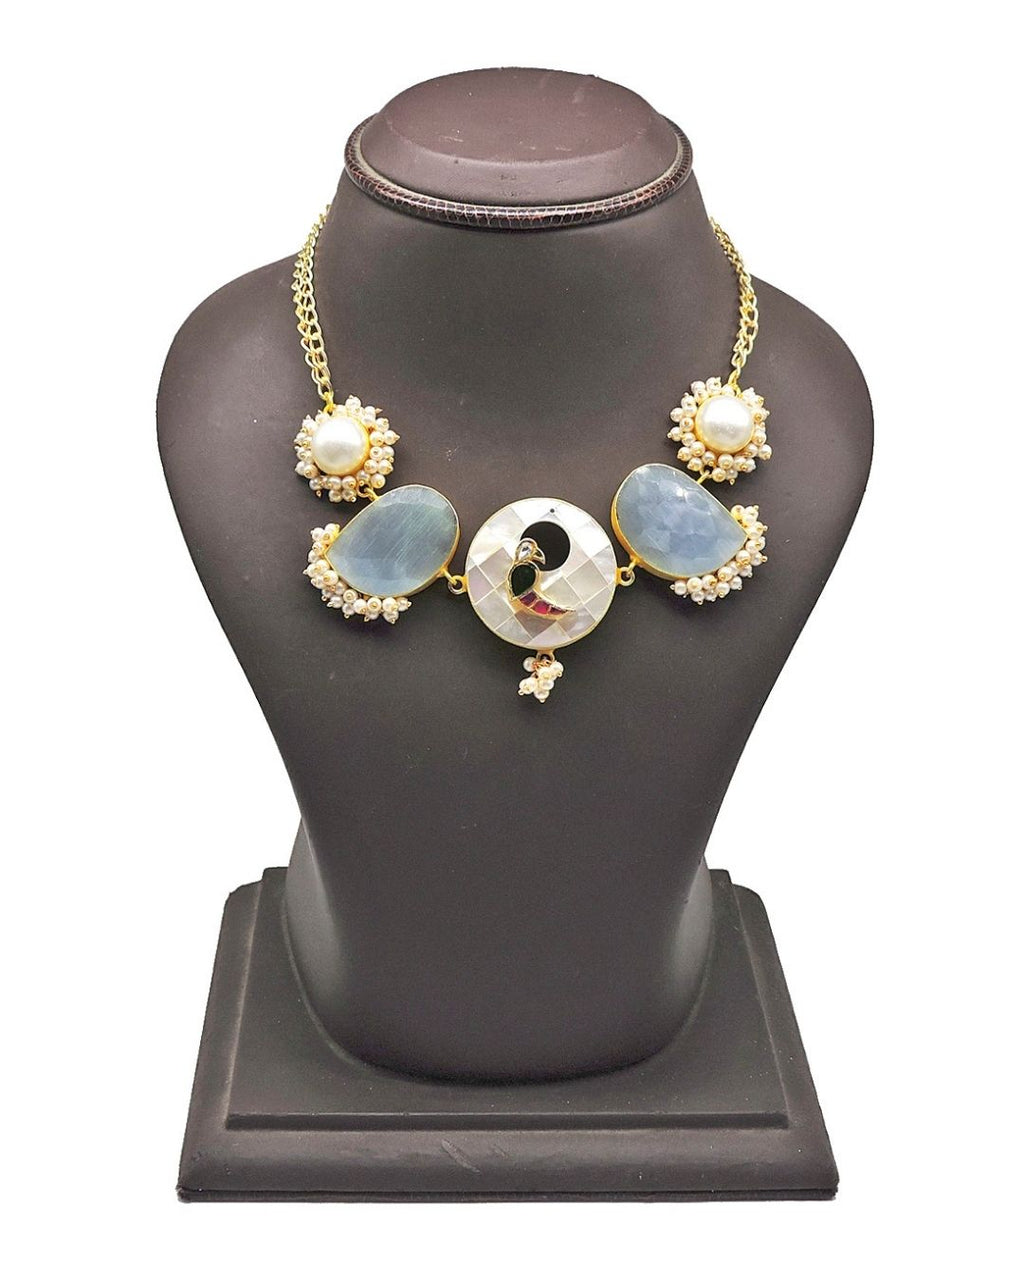 Savanna Necklace - Necklaces - Handcrafted Jewellery - Made in India - Dubai Jewellery, Fashion & Lifestyle - Dori